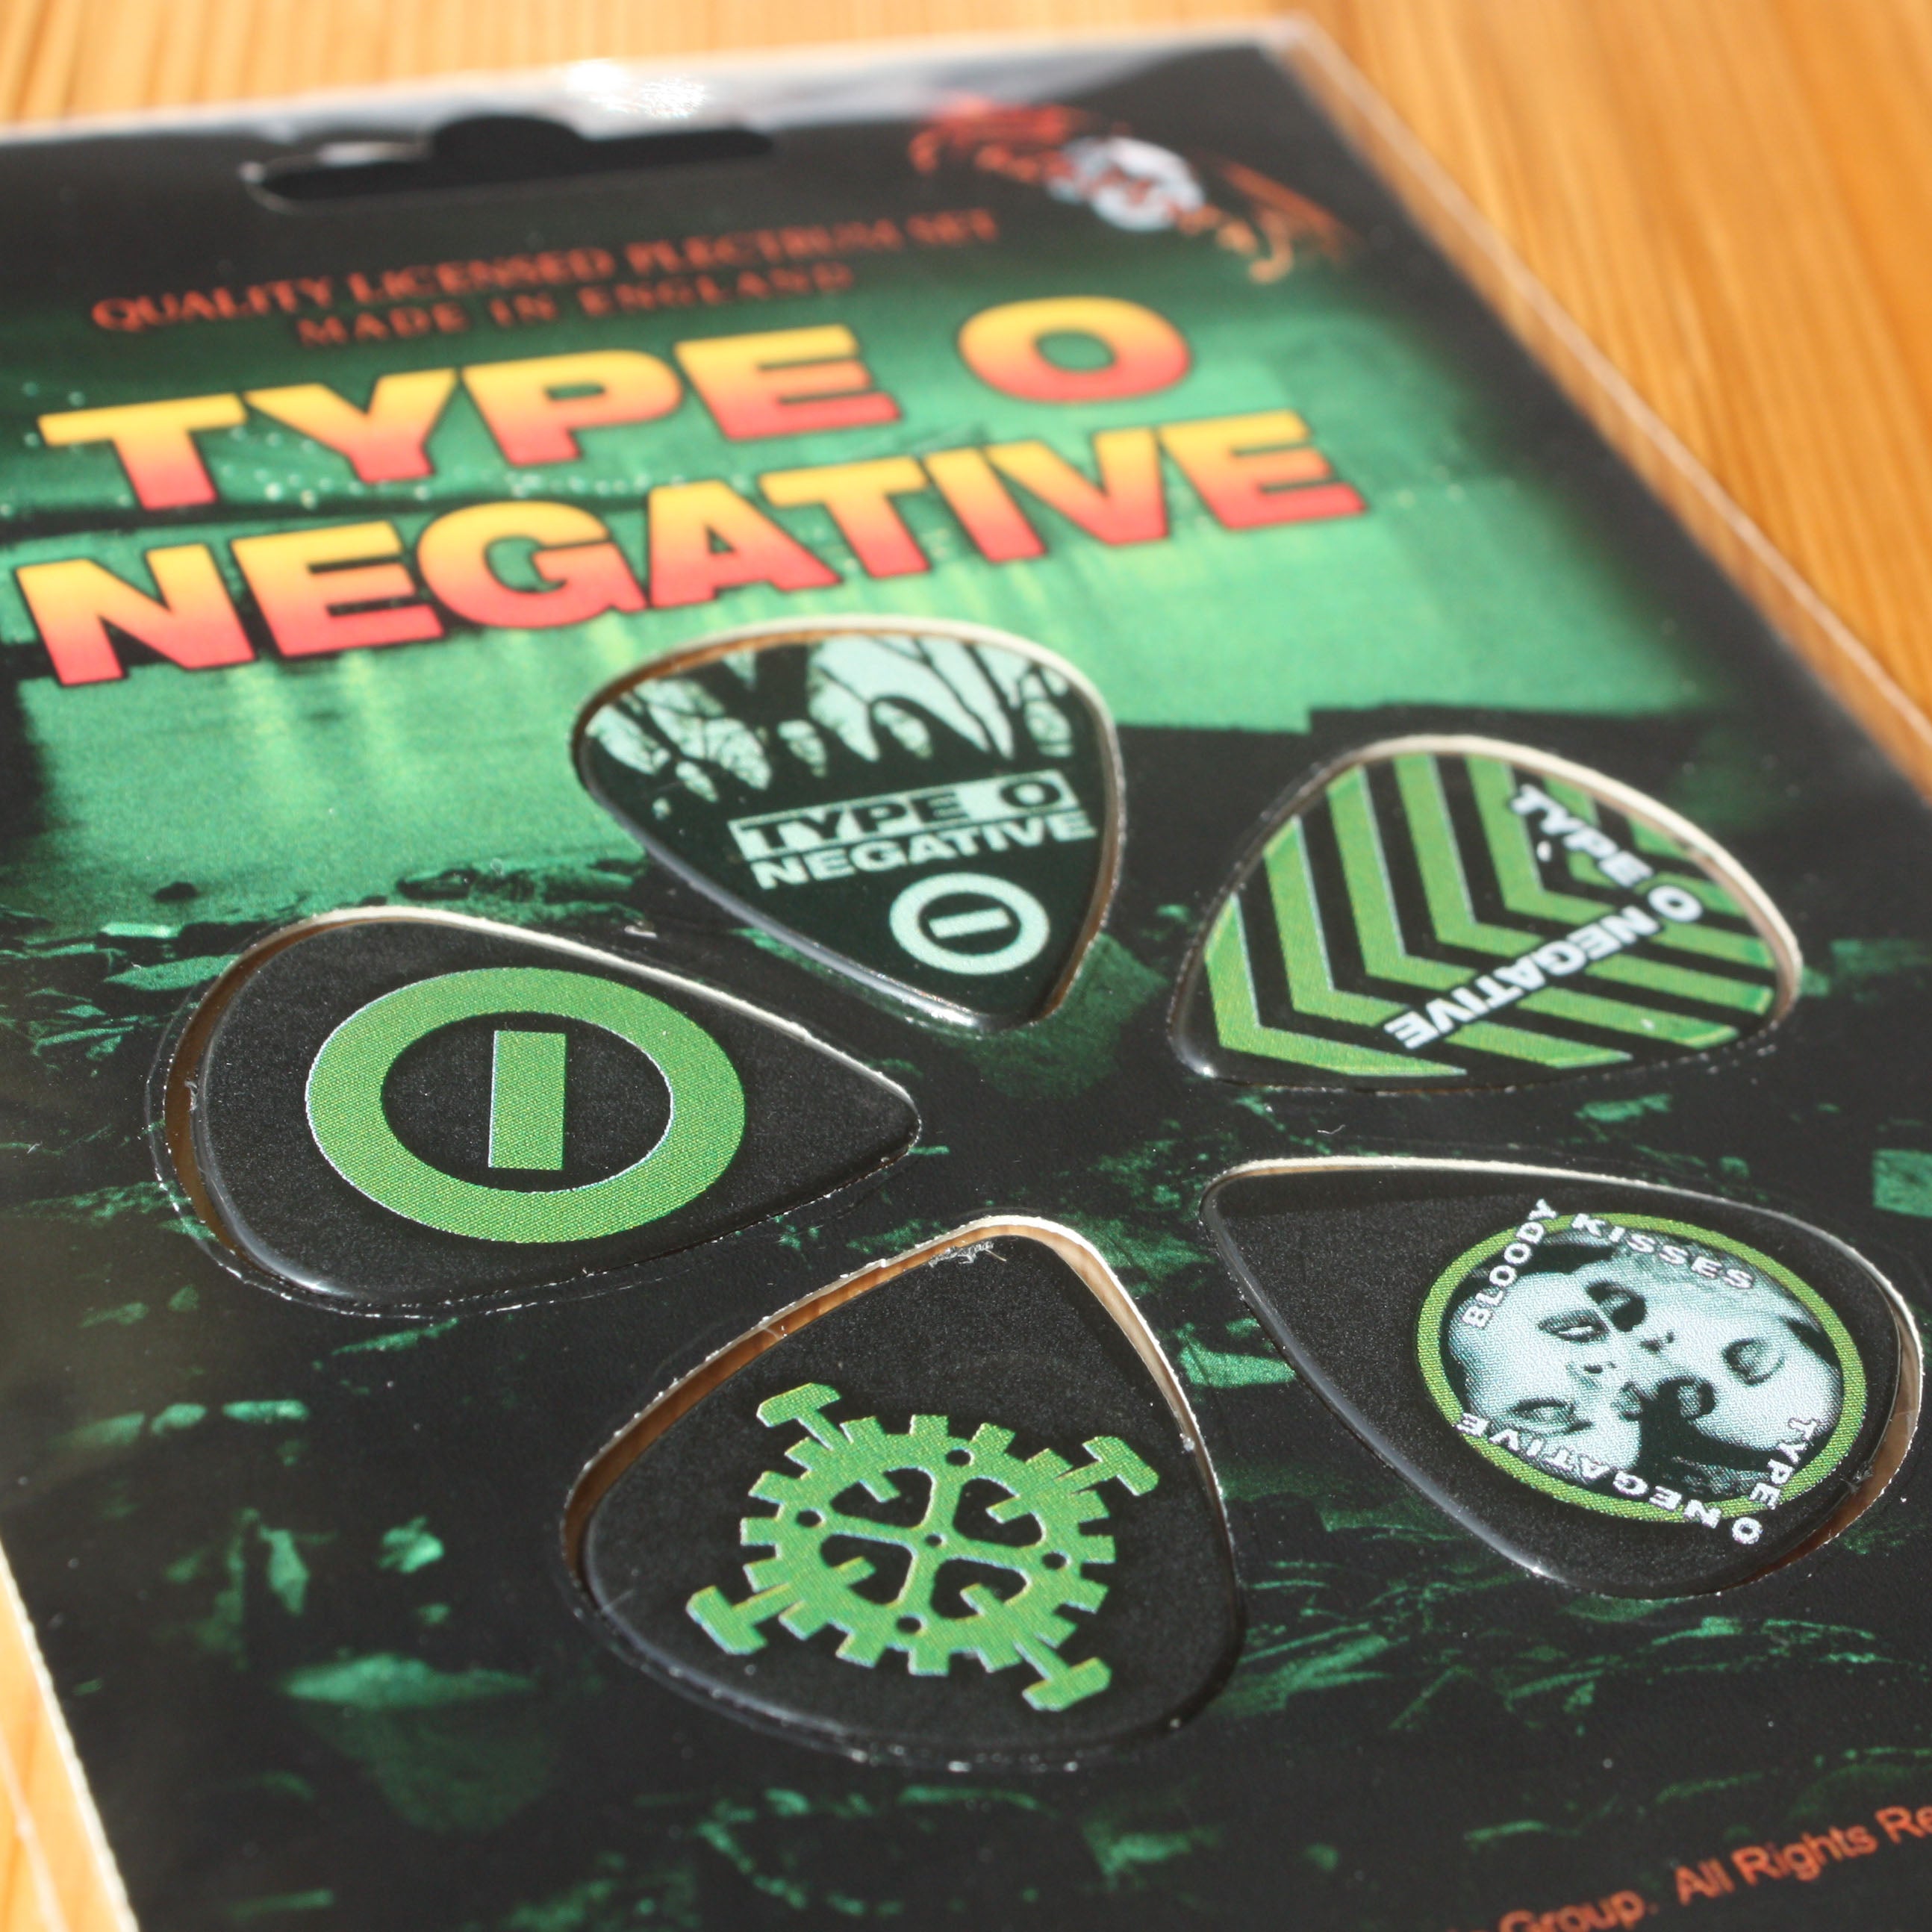 Type O Negative - Logo (Plectrum Pack)